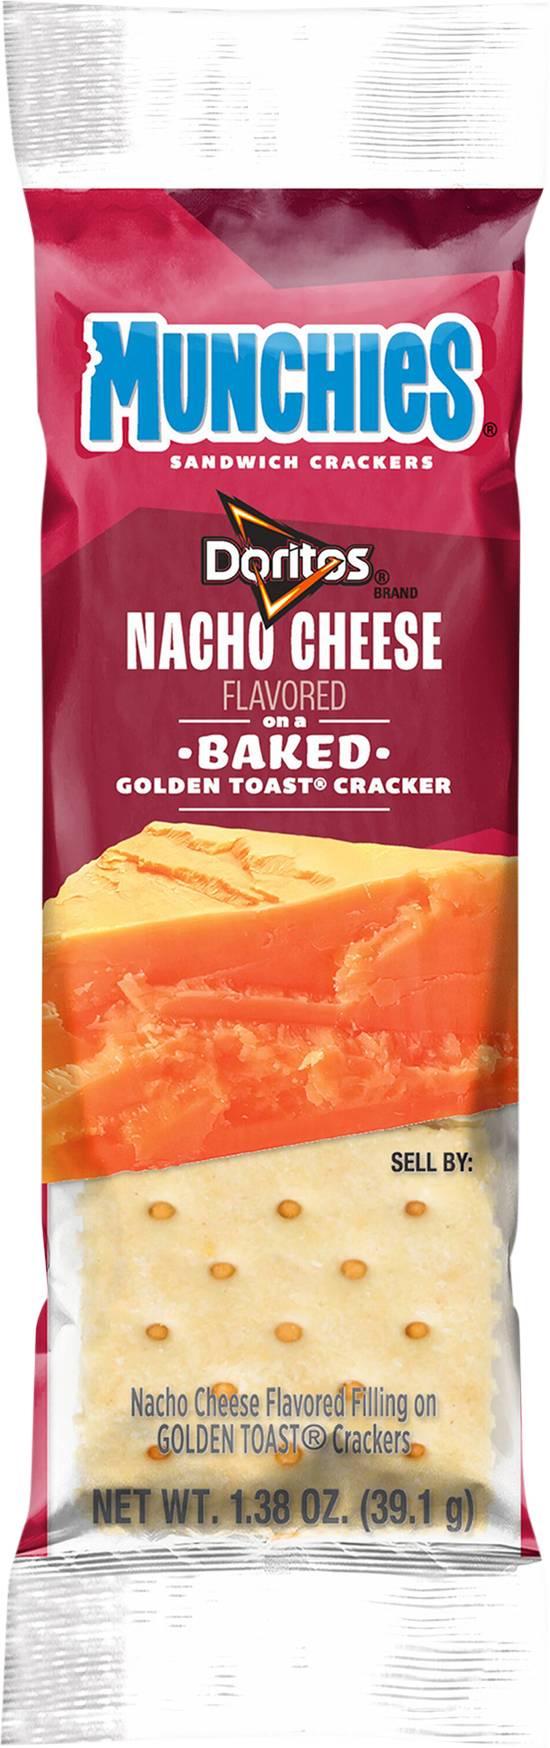 Munchies Doritos Baked Sandwich Crackers (nacho cheese)